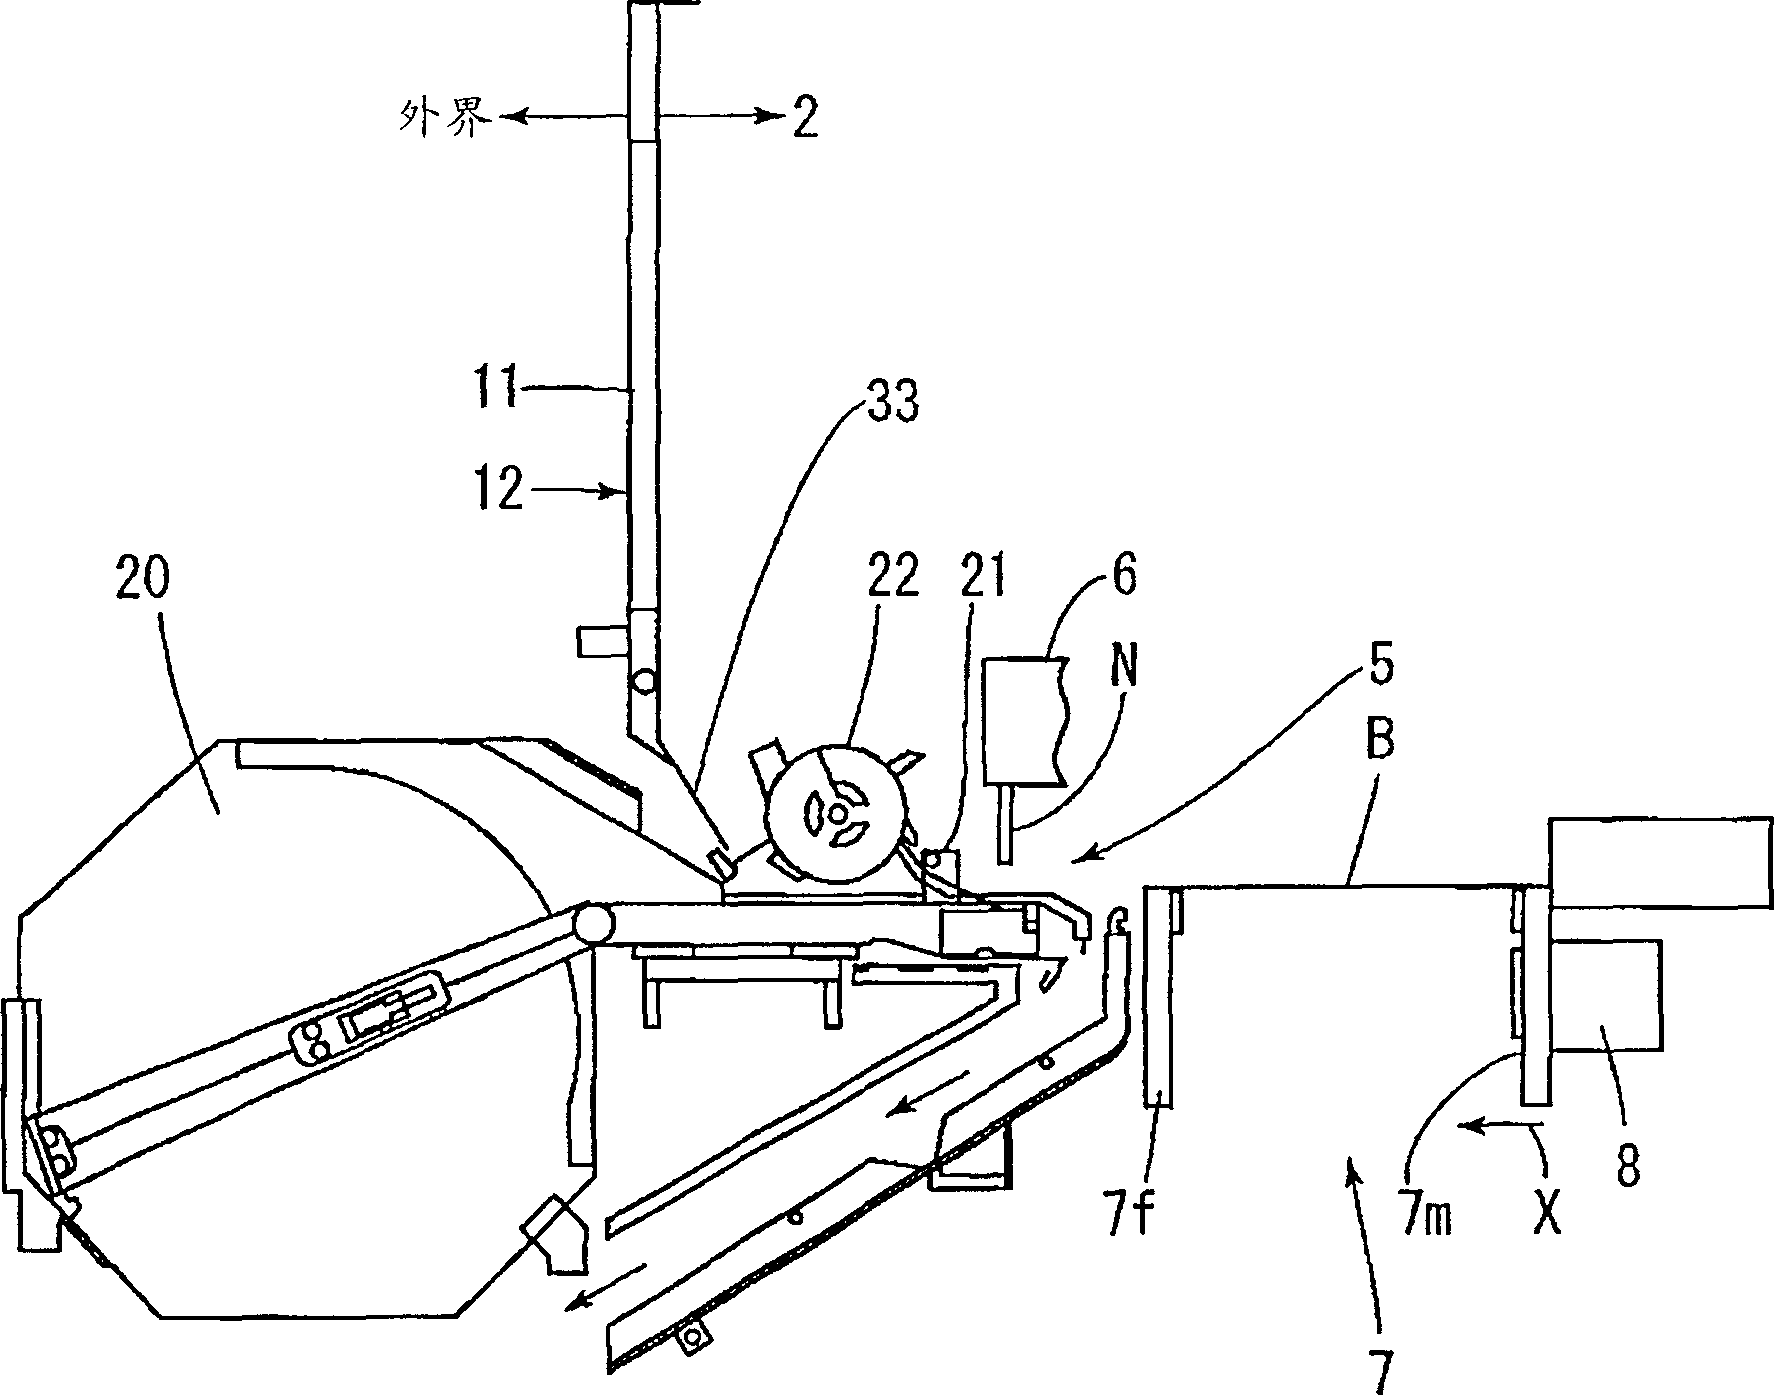 Parts mounting apparatus